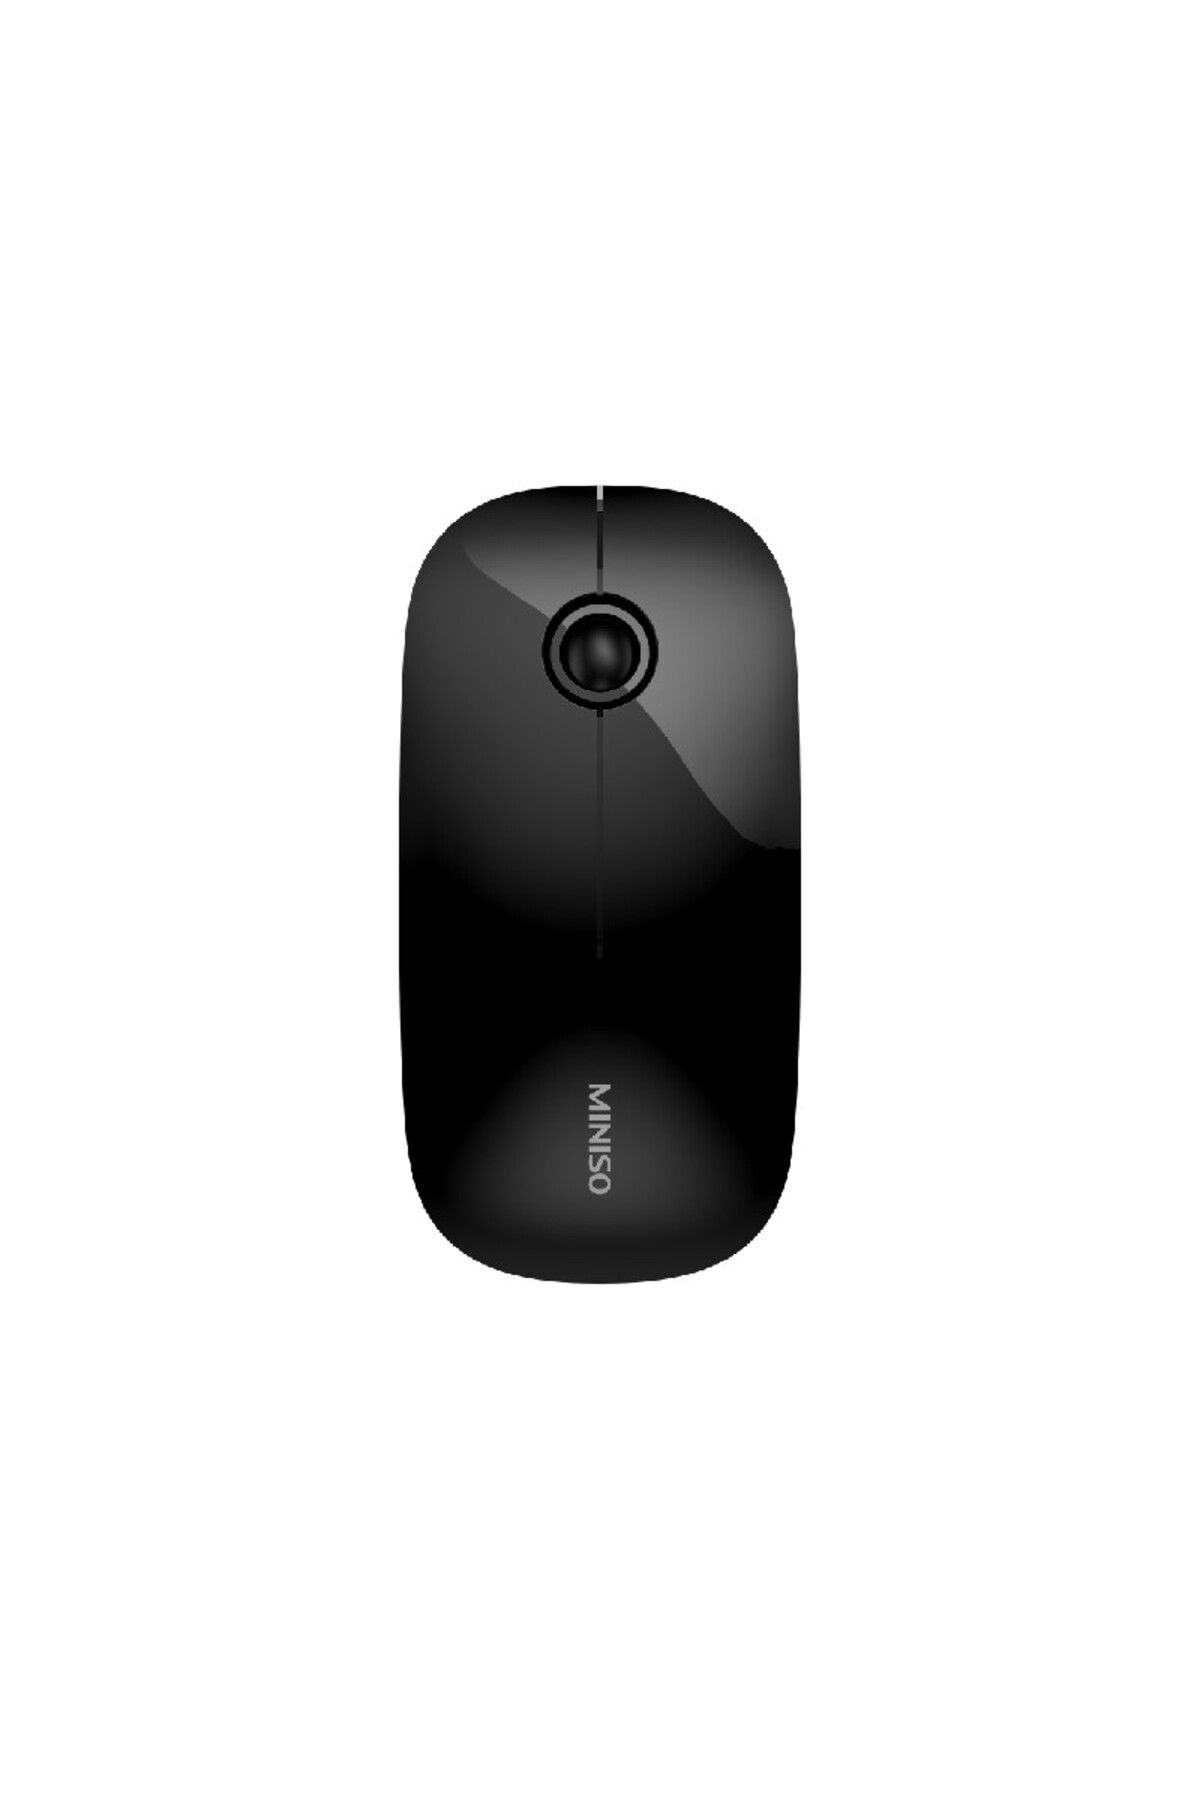 Miniso İnce Yapılı Wireless Mouse - Siyah